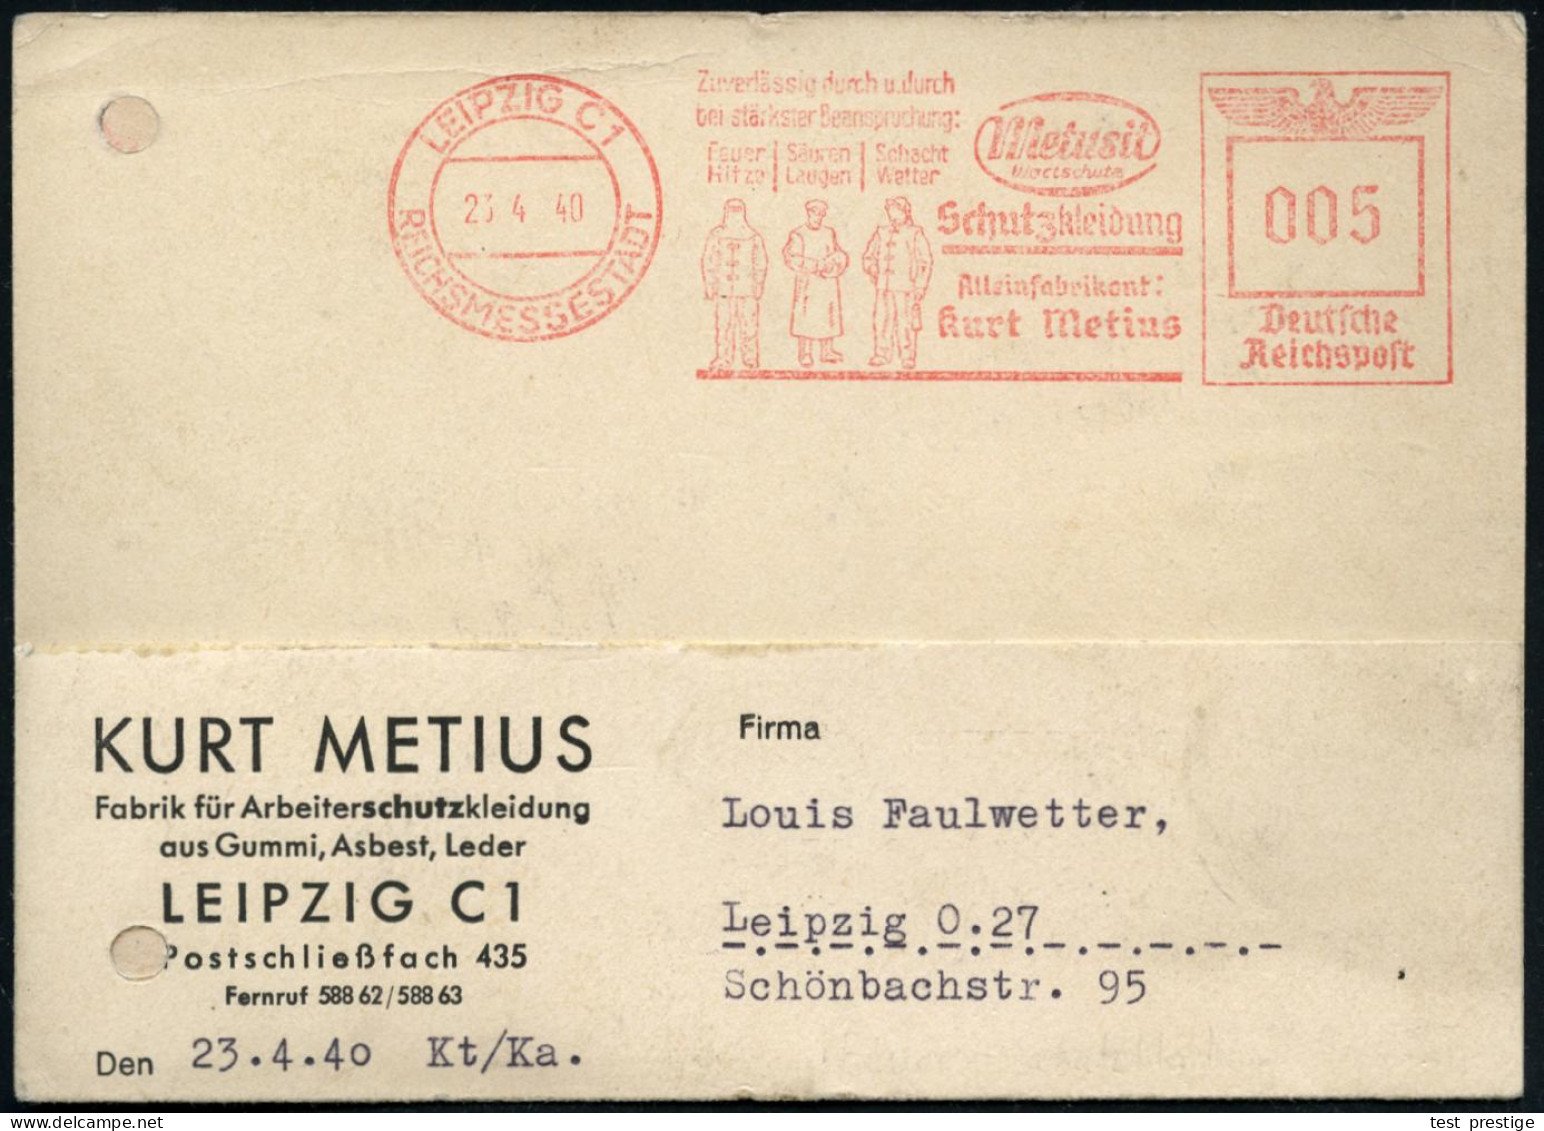 LEIPZIG C1/ REICHSMESSESTADT/ Metusit/ ..Schutzkleidung/ Feuer/ Hitze/ Säuren/ Laugen/ Schacht../ Kurt Metius 1940 (23.4 - Firemen